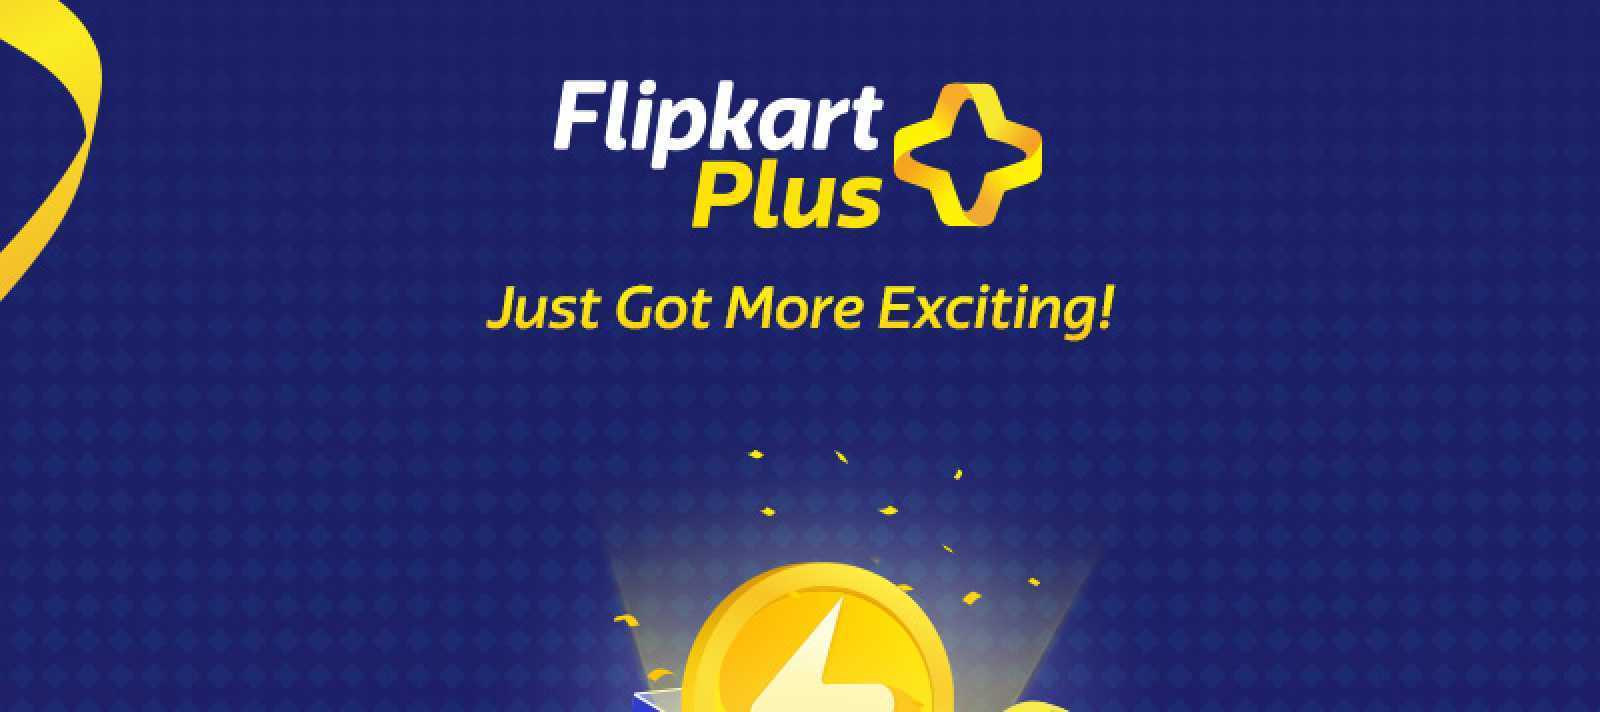 Flipkart segera dibawa Amazon Alternatif video utama di India